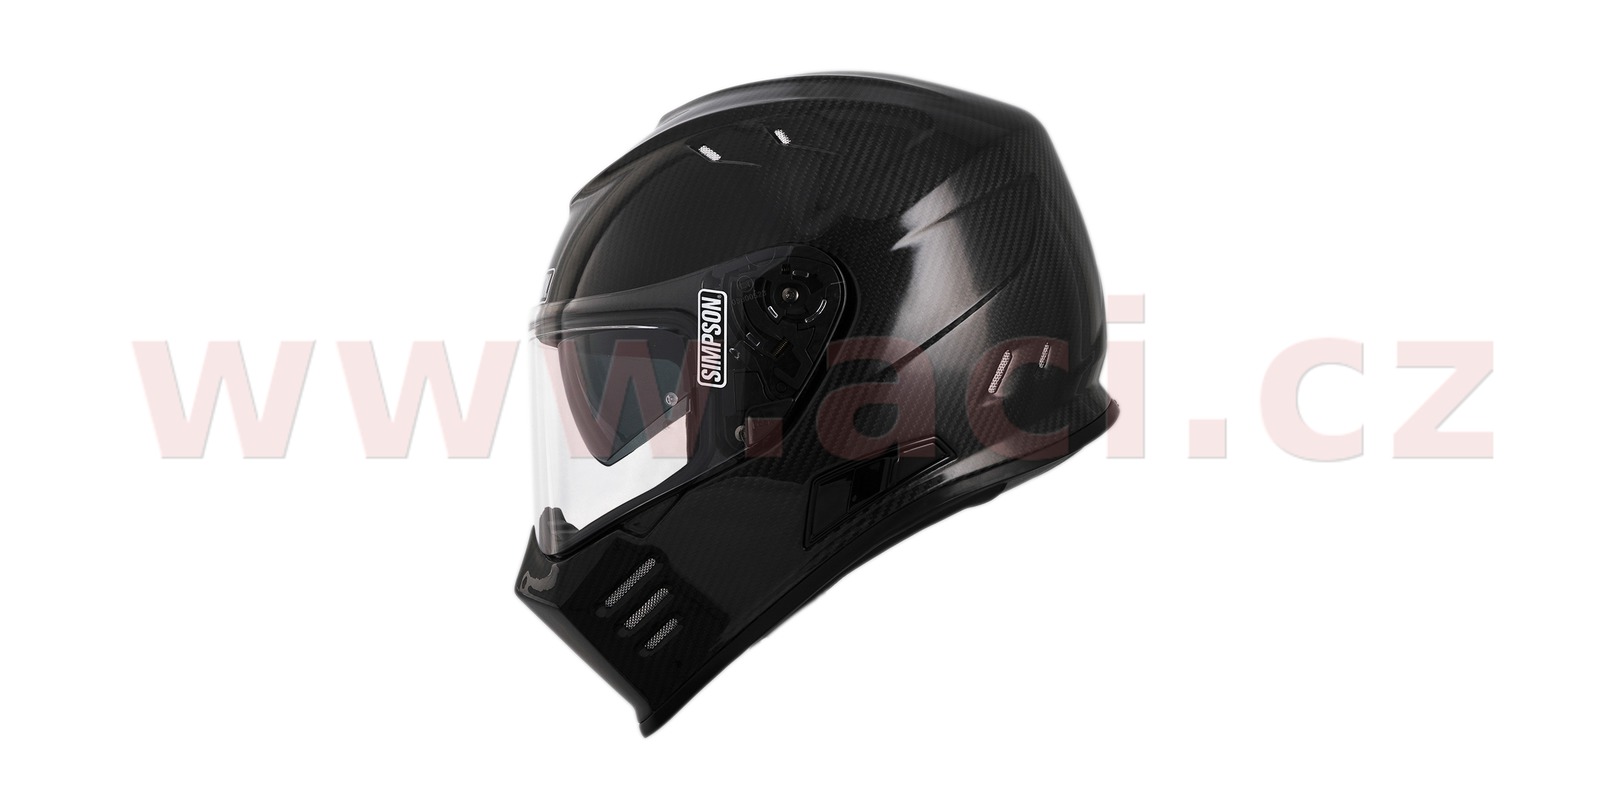 helmet VENOM, SIMPSON (carbon)